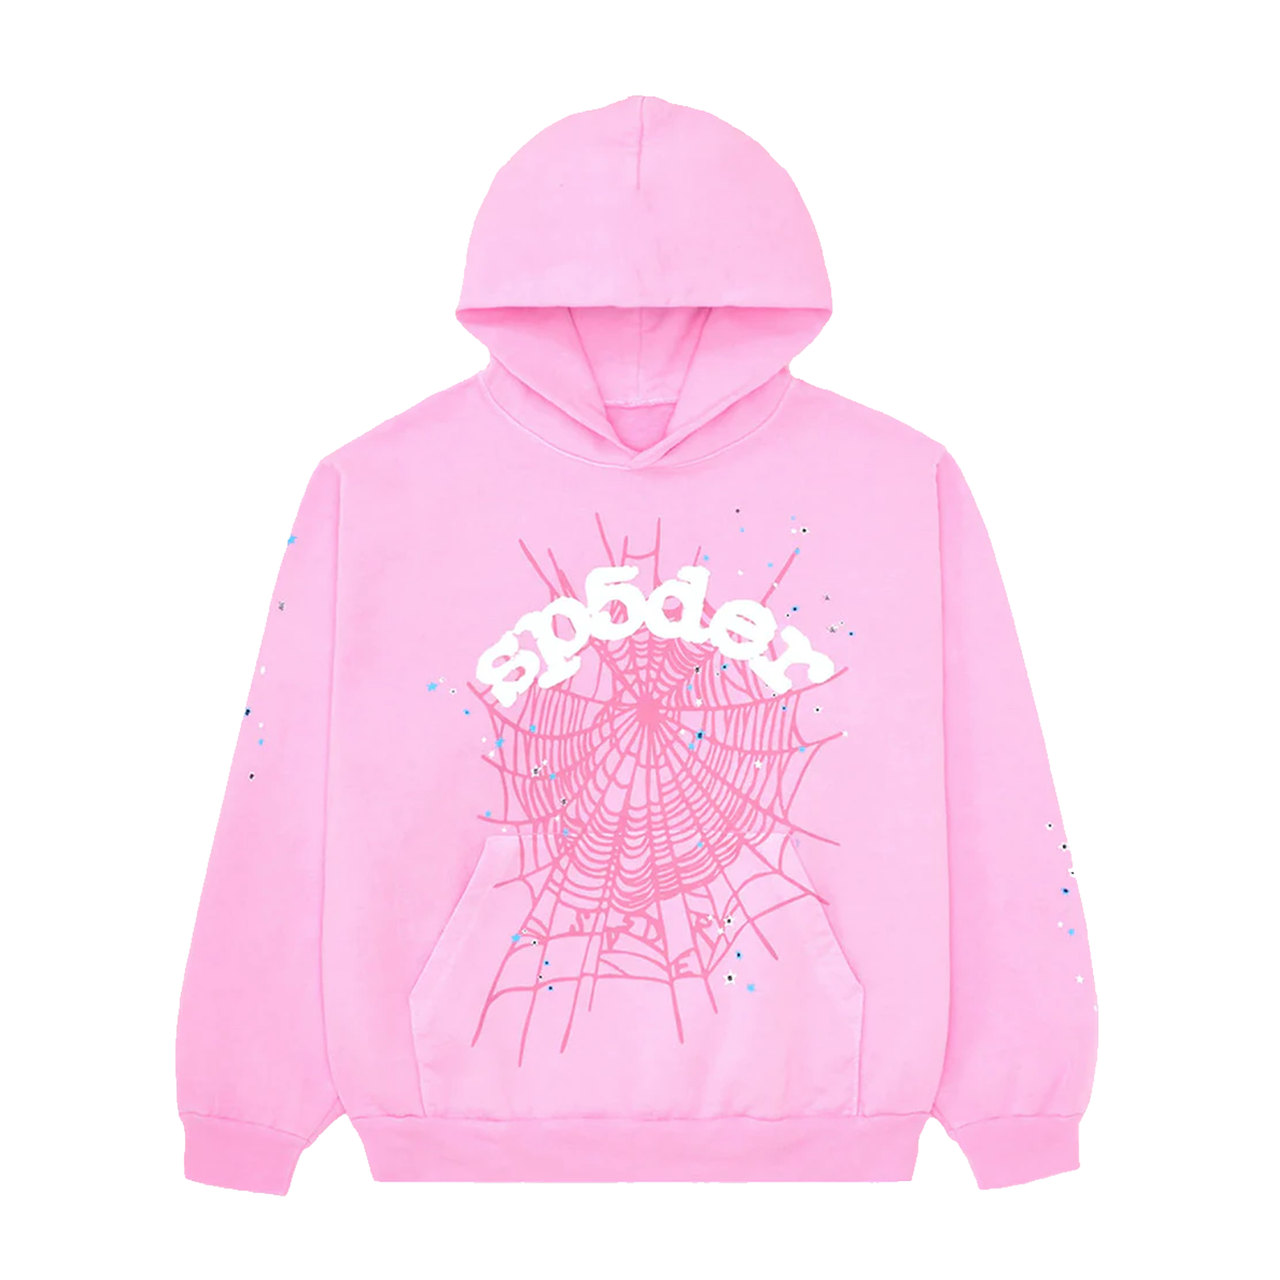 Sp5der Worldwide OG Web Sweatshirt Pink